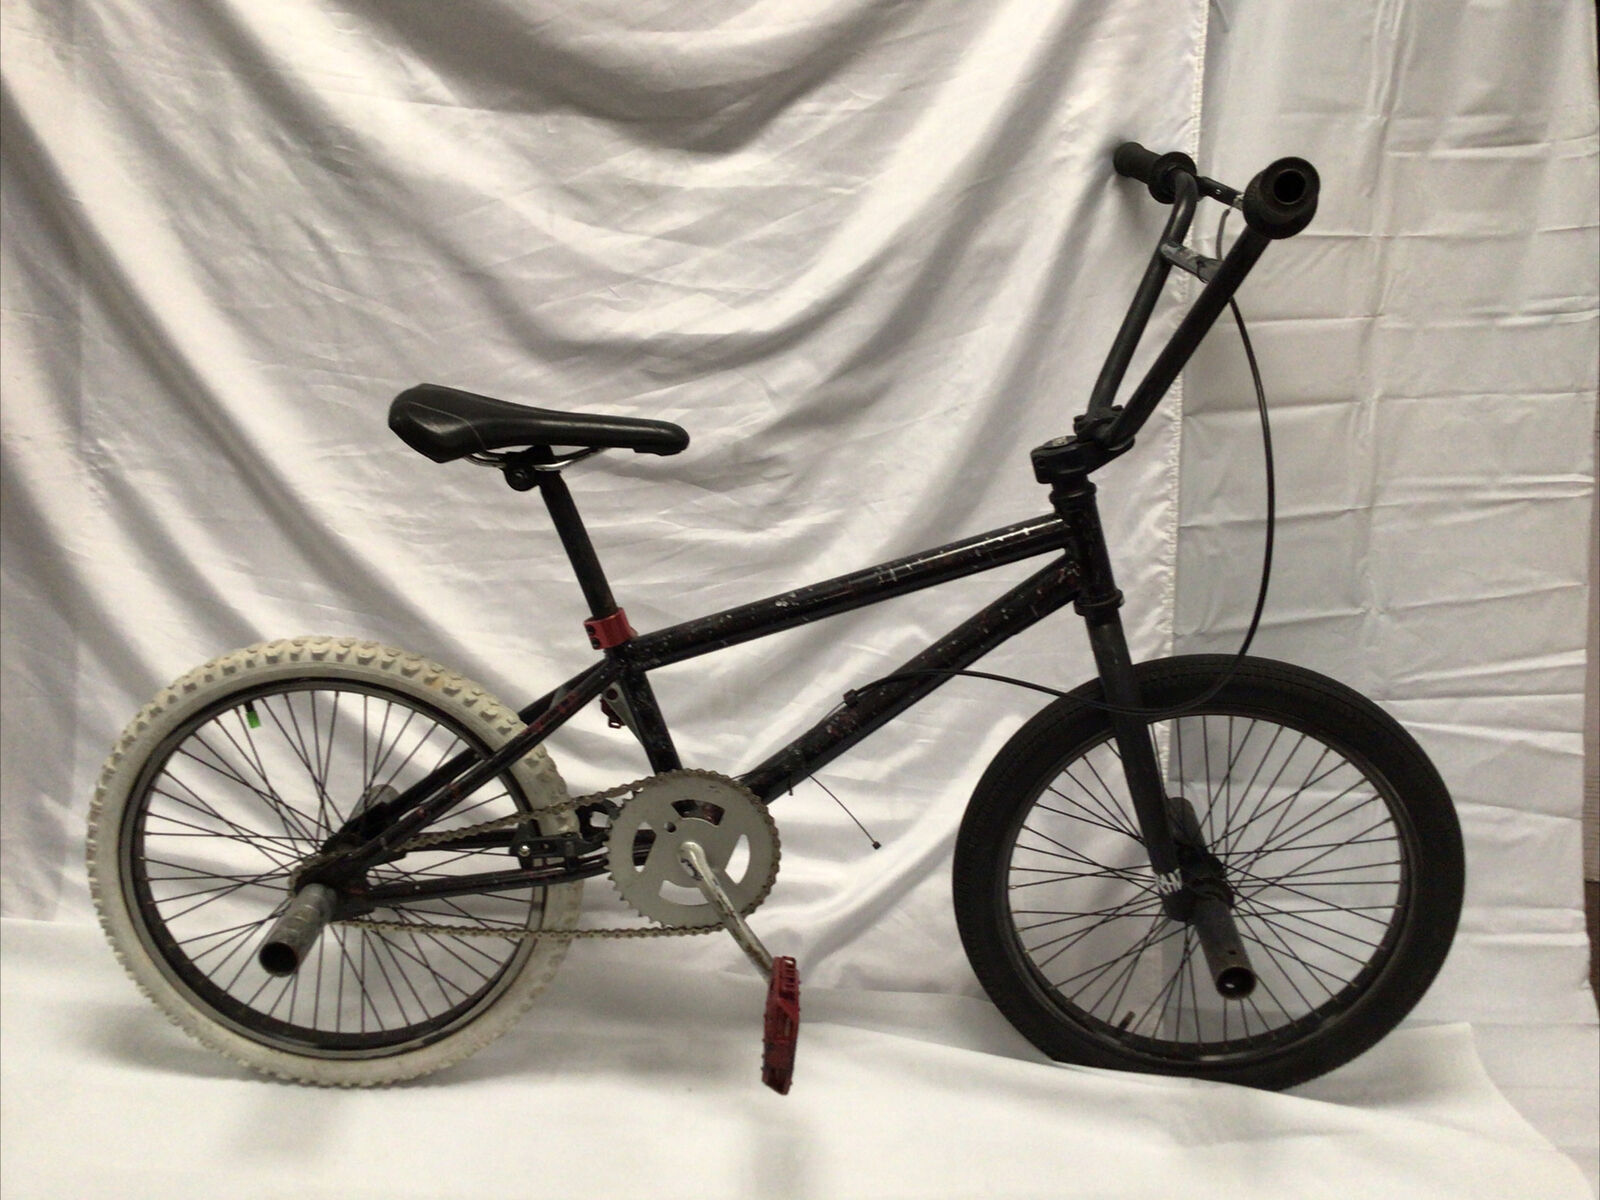 DiamondBack Venom BMX Bike Frame 20” Fully Customized - Rant, Paint, Spartan